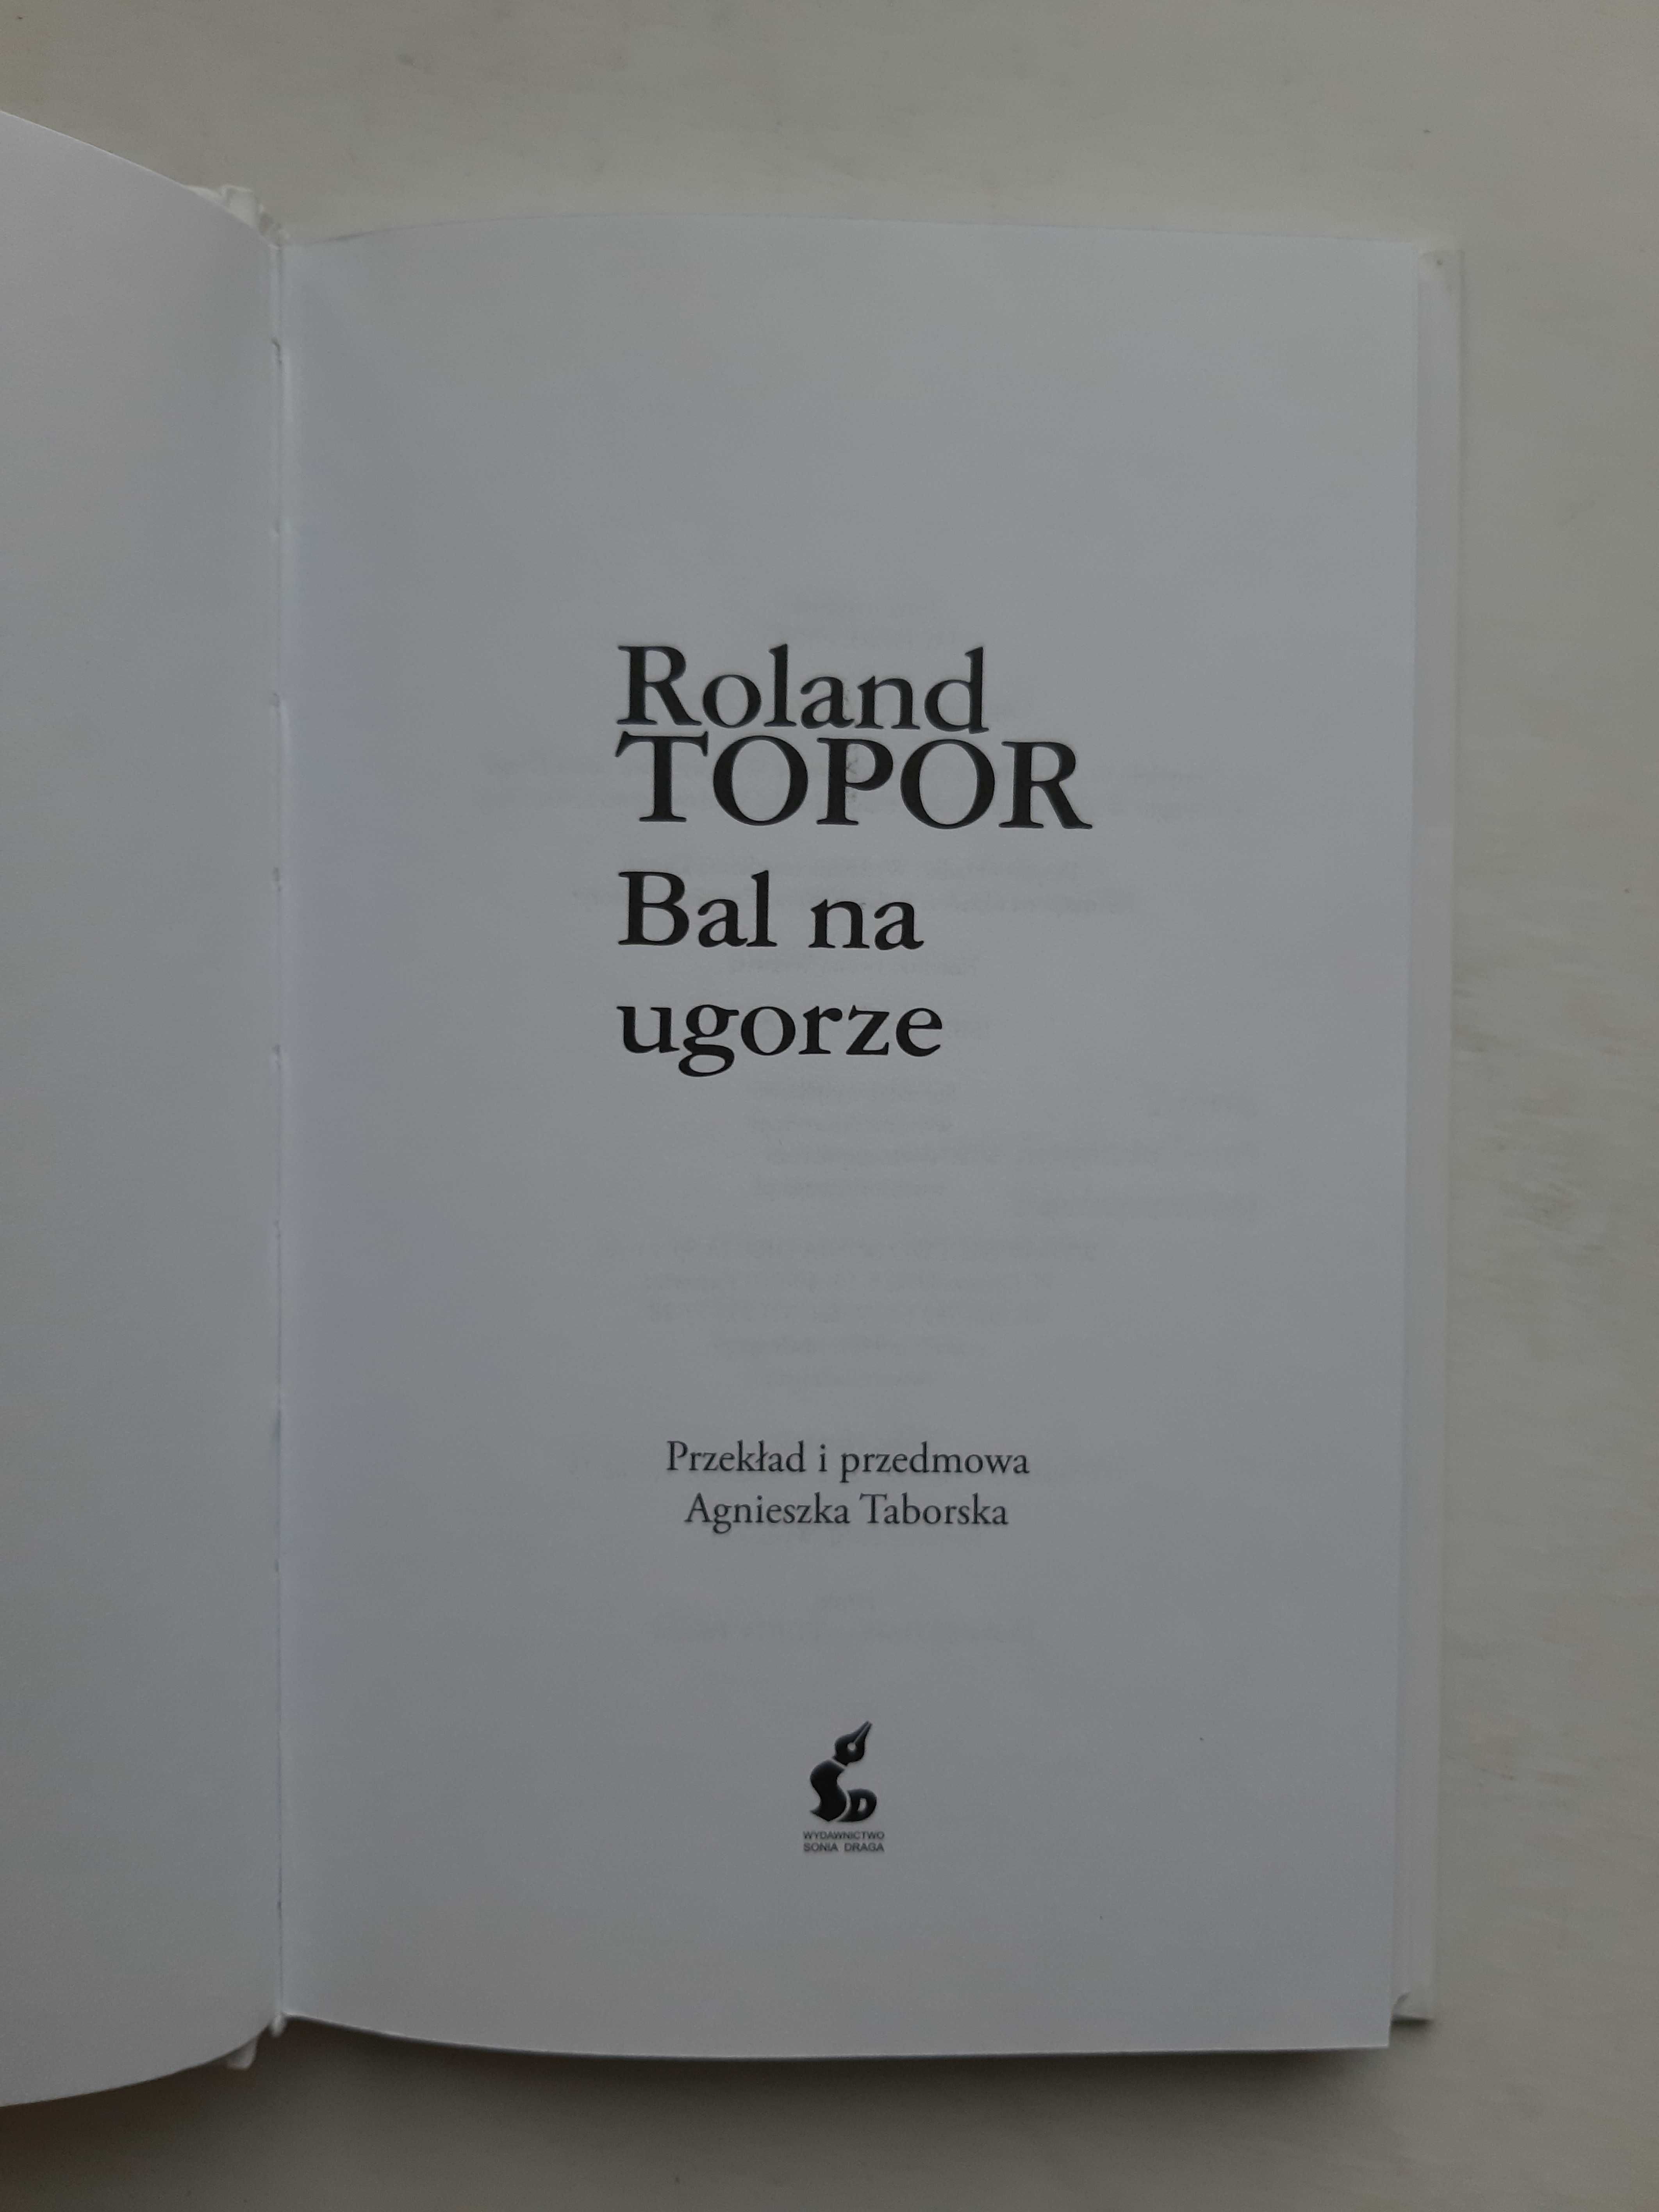 Bal na ugorze - Roland Topor